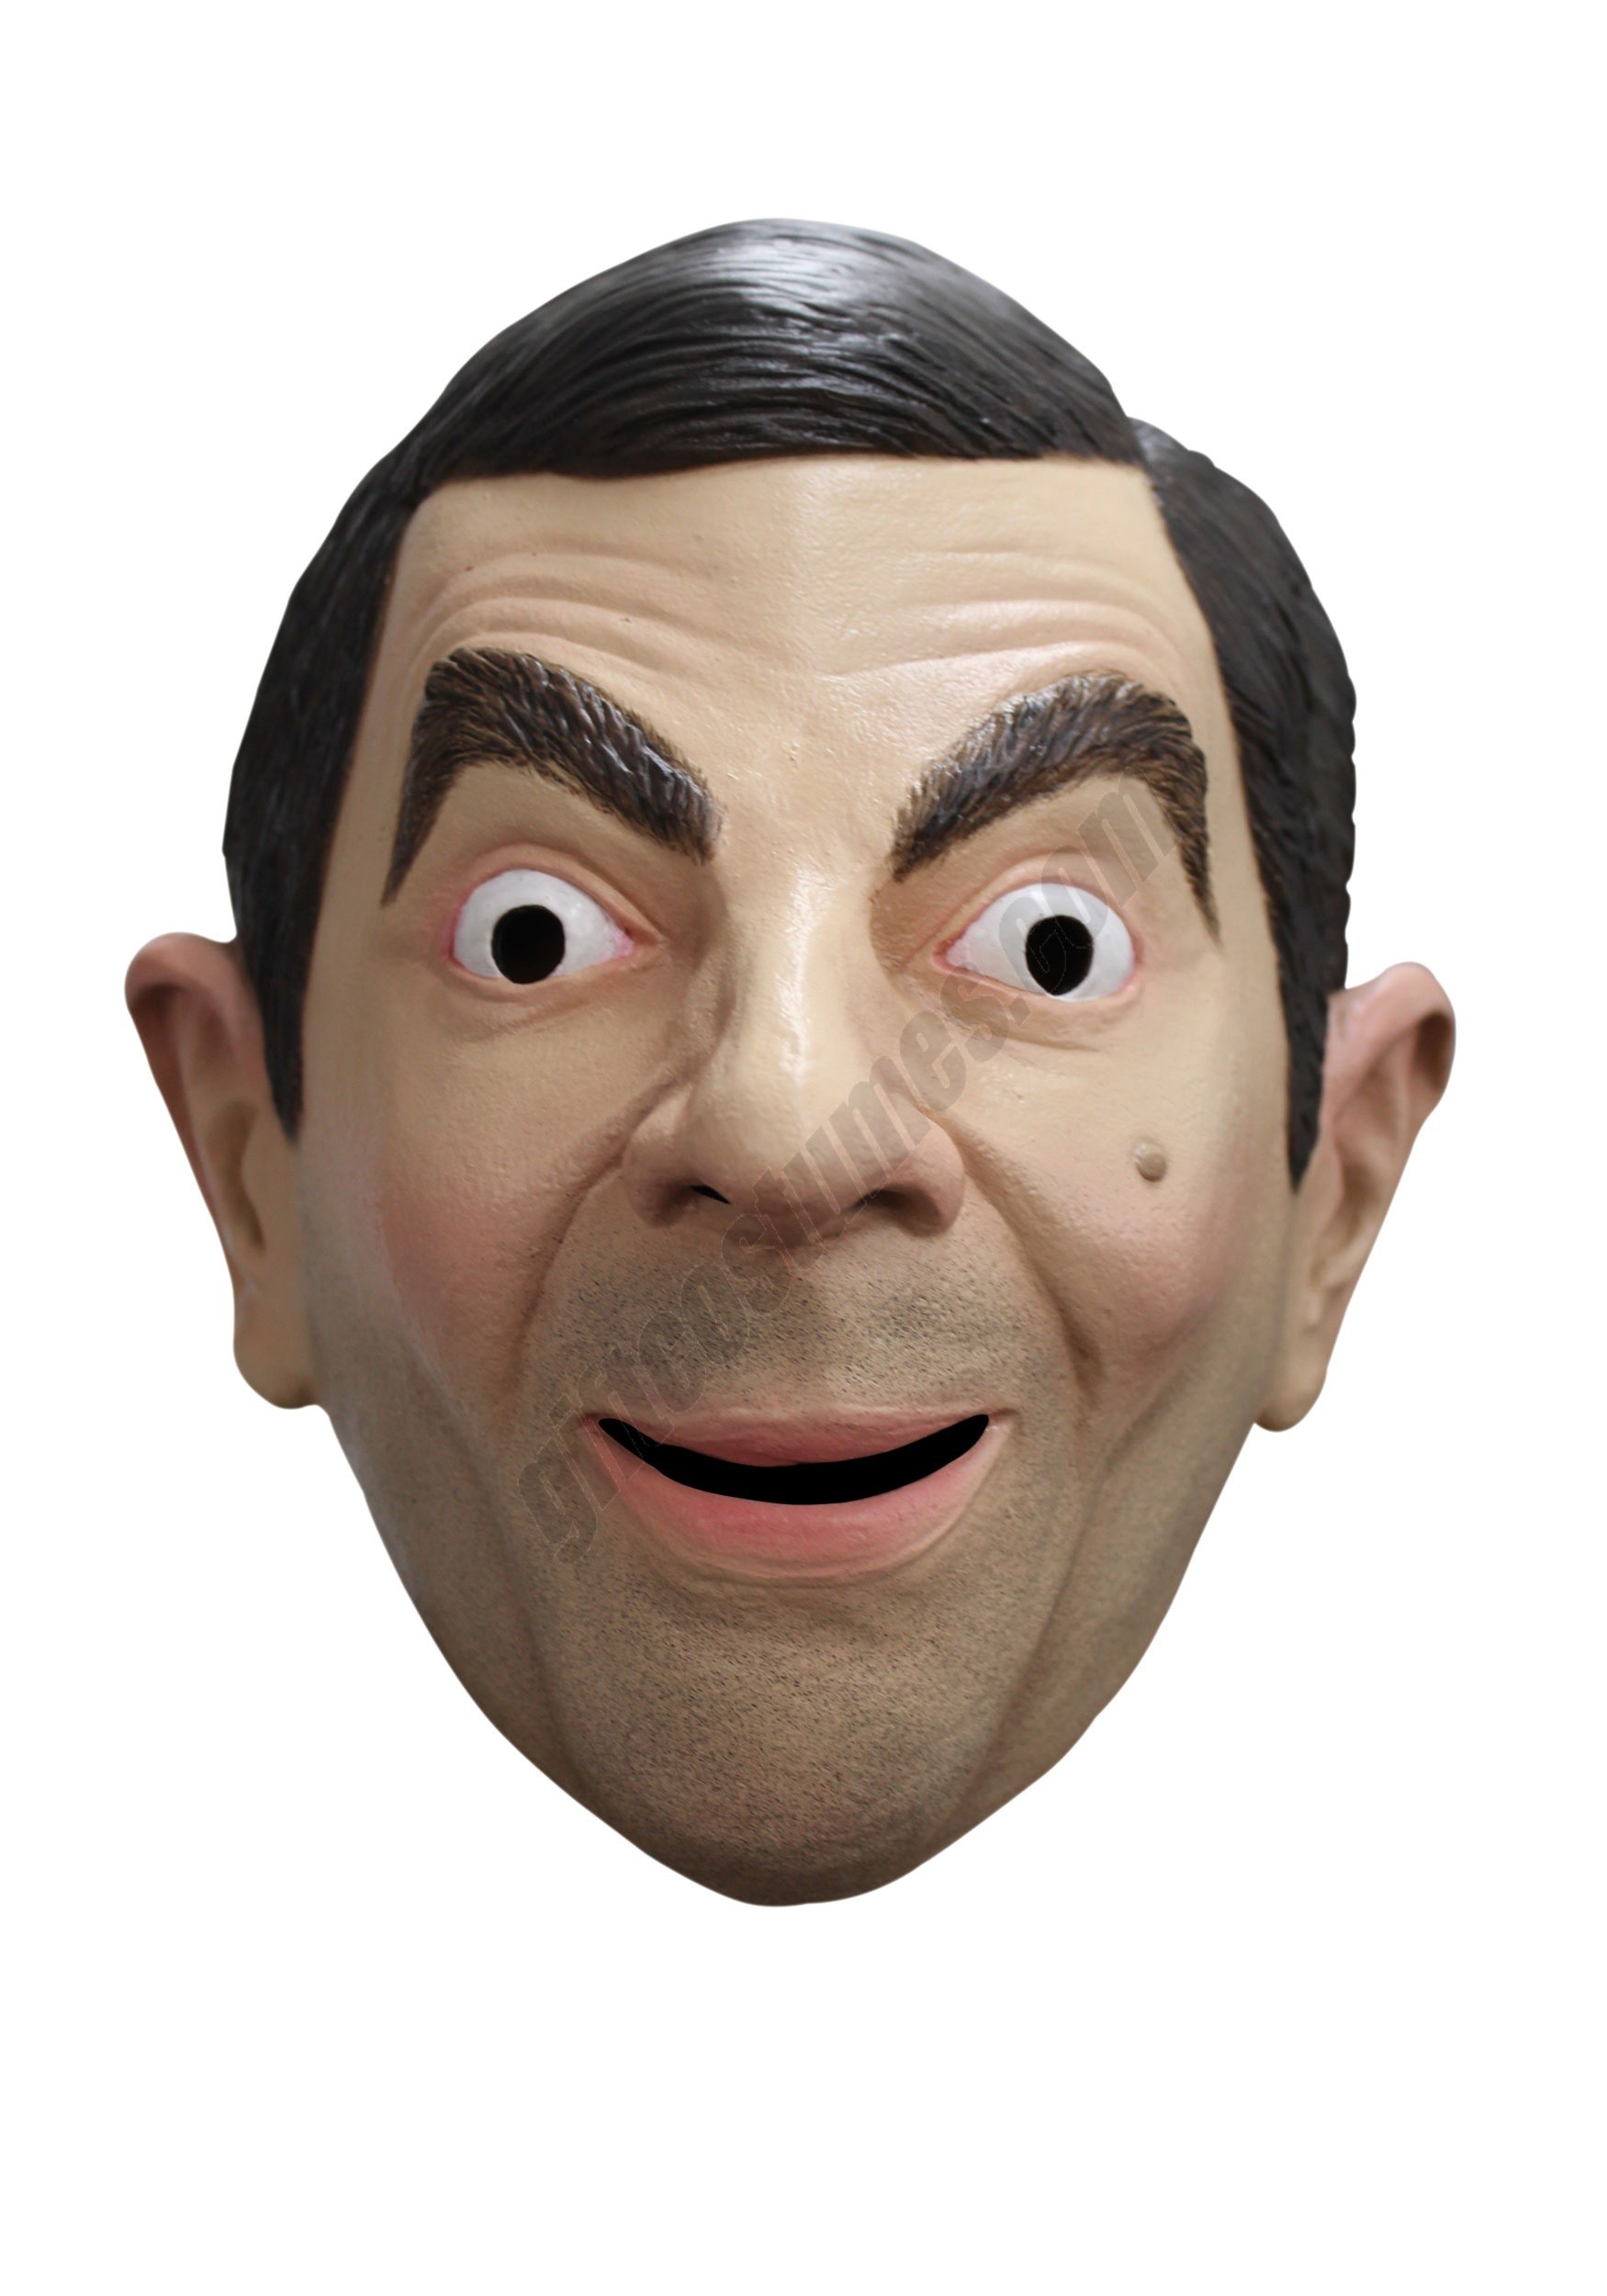 Adult Mr. Bean Mask Promotions - Adult Mr. Bean Mask Promotions